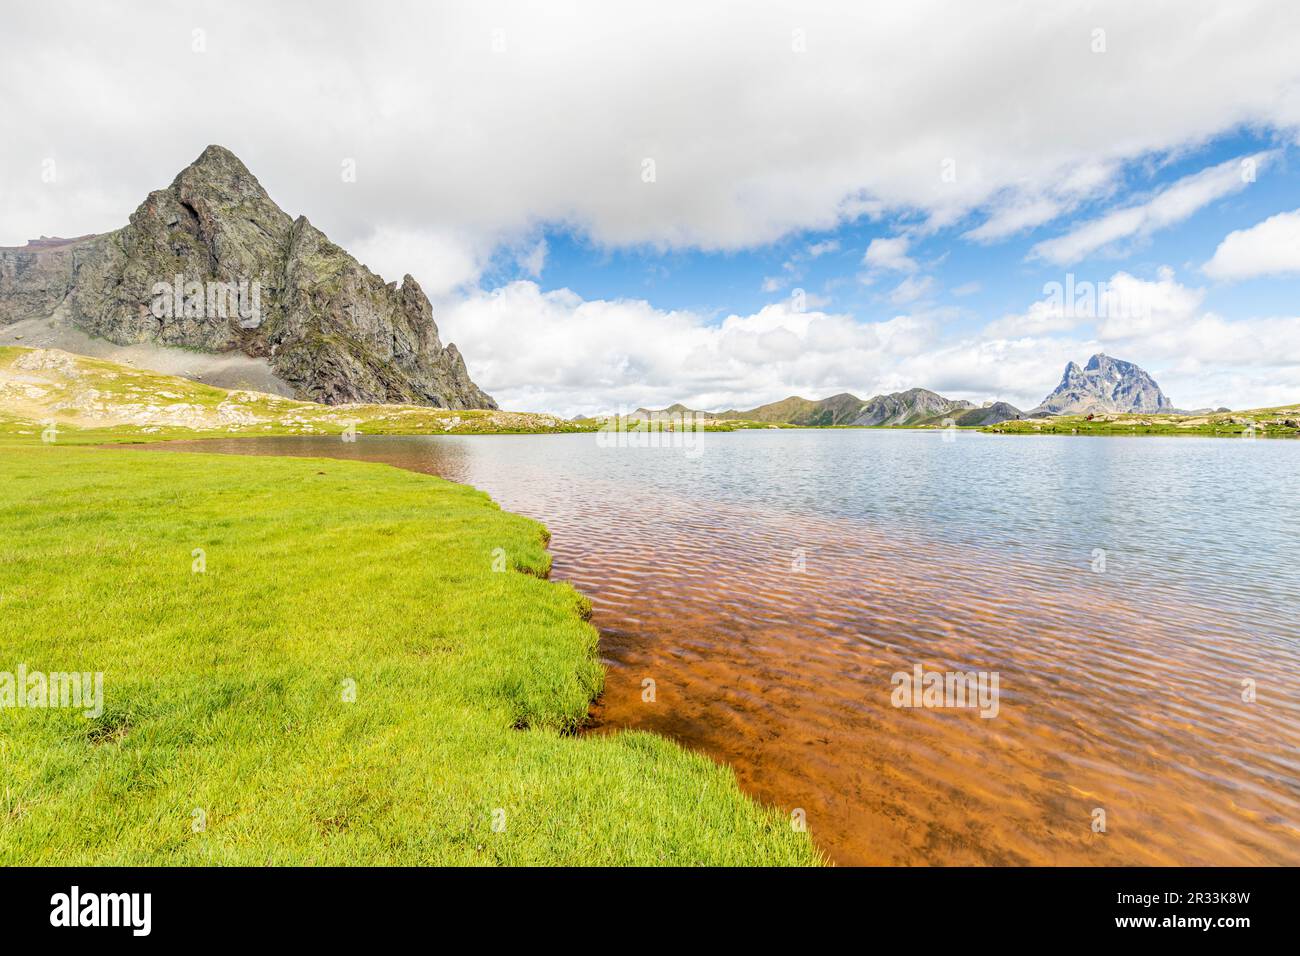 Anayet peak and lake, Tena Valley, Huesca, Spain Stock Photo